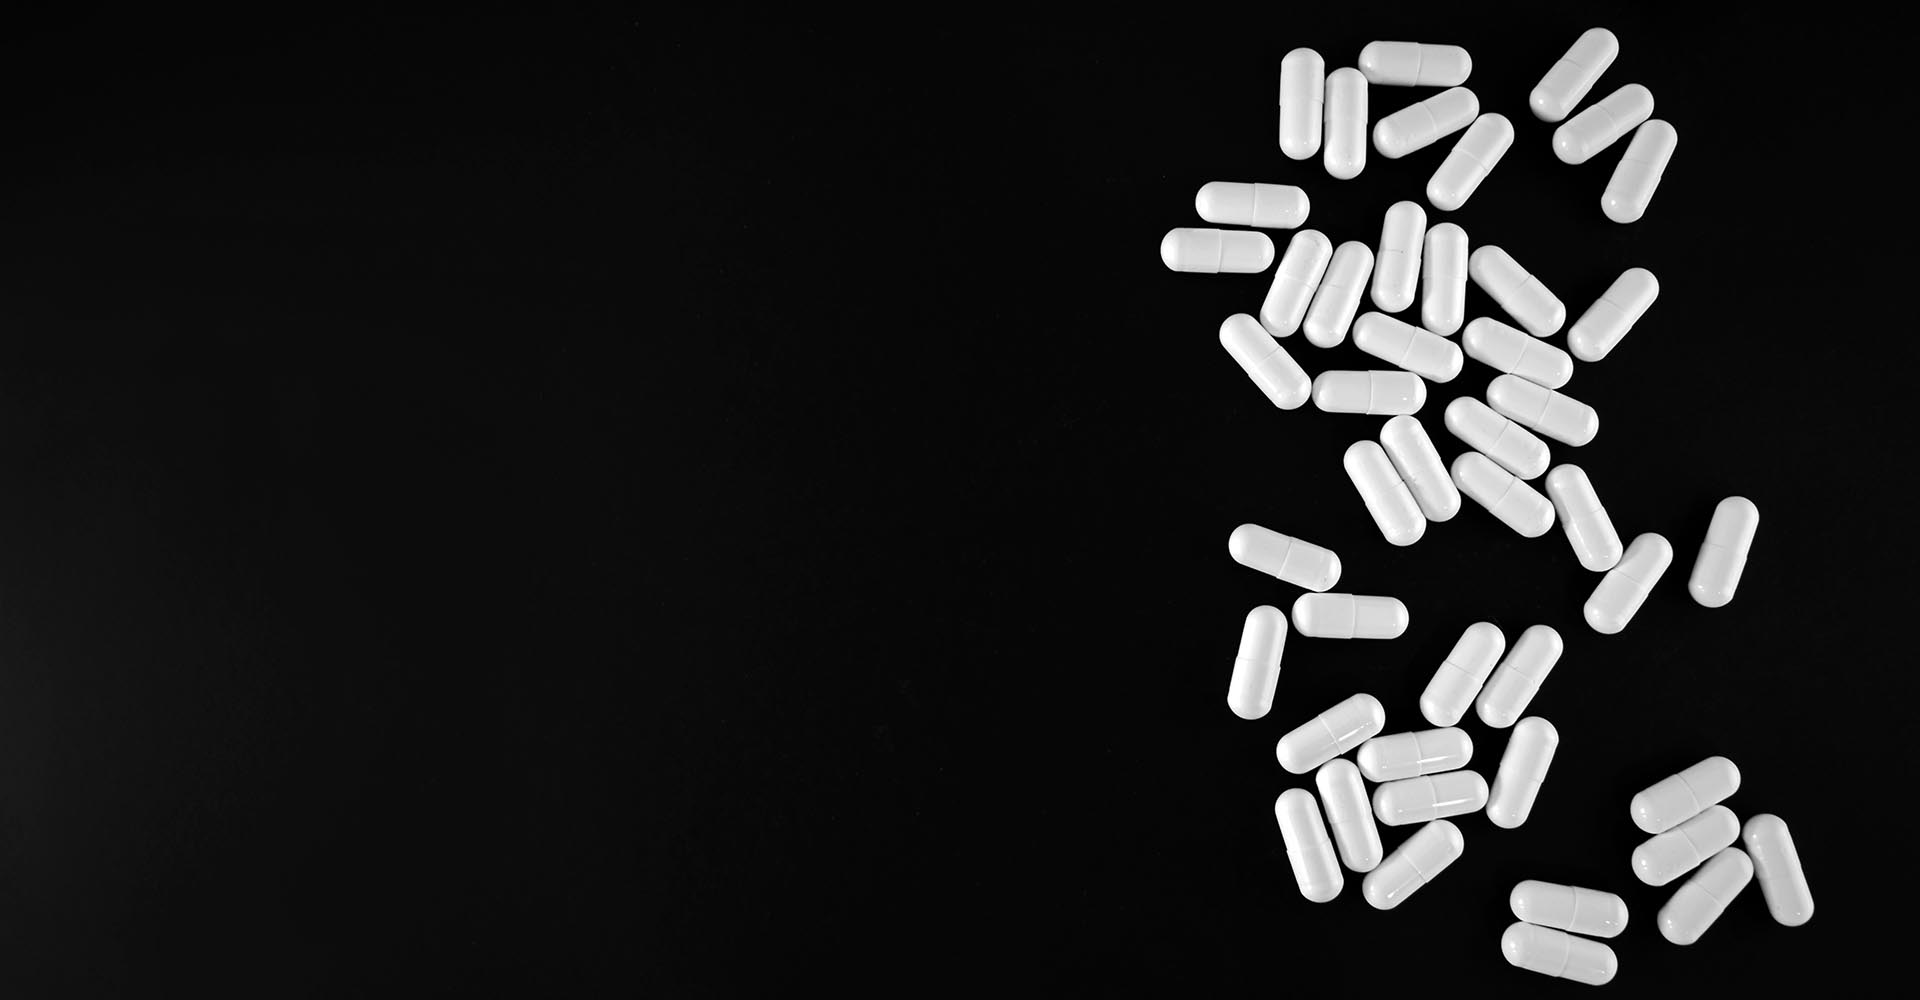 White pills cascading down a black background